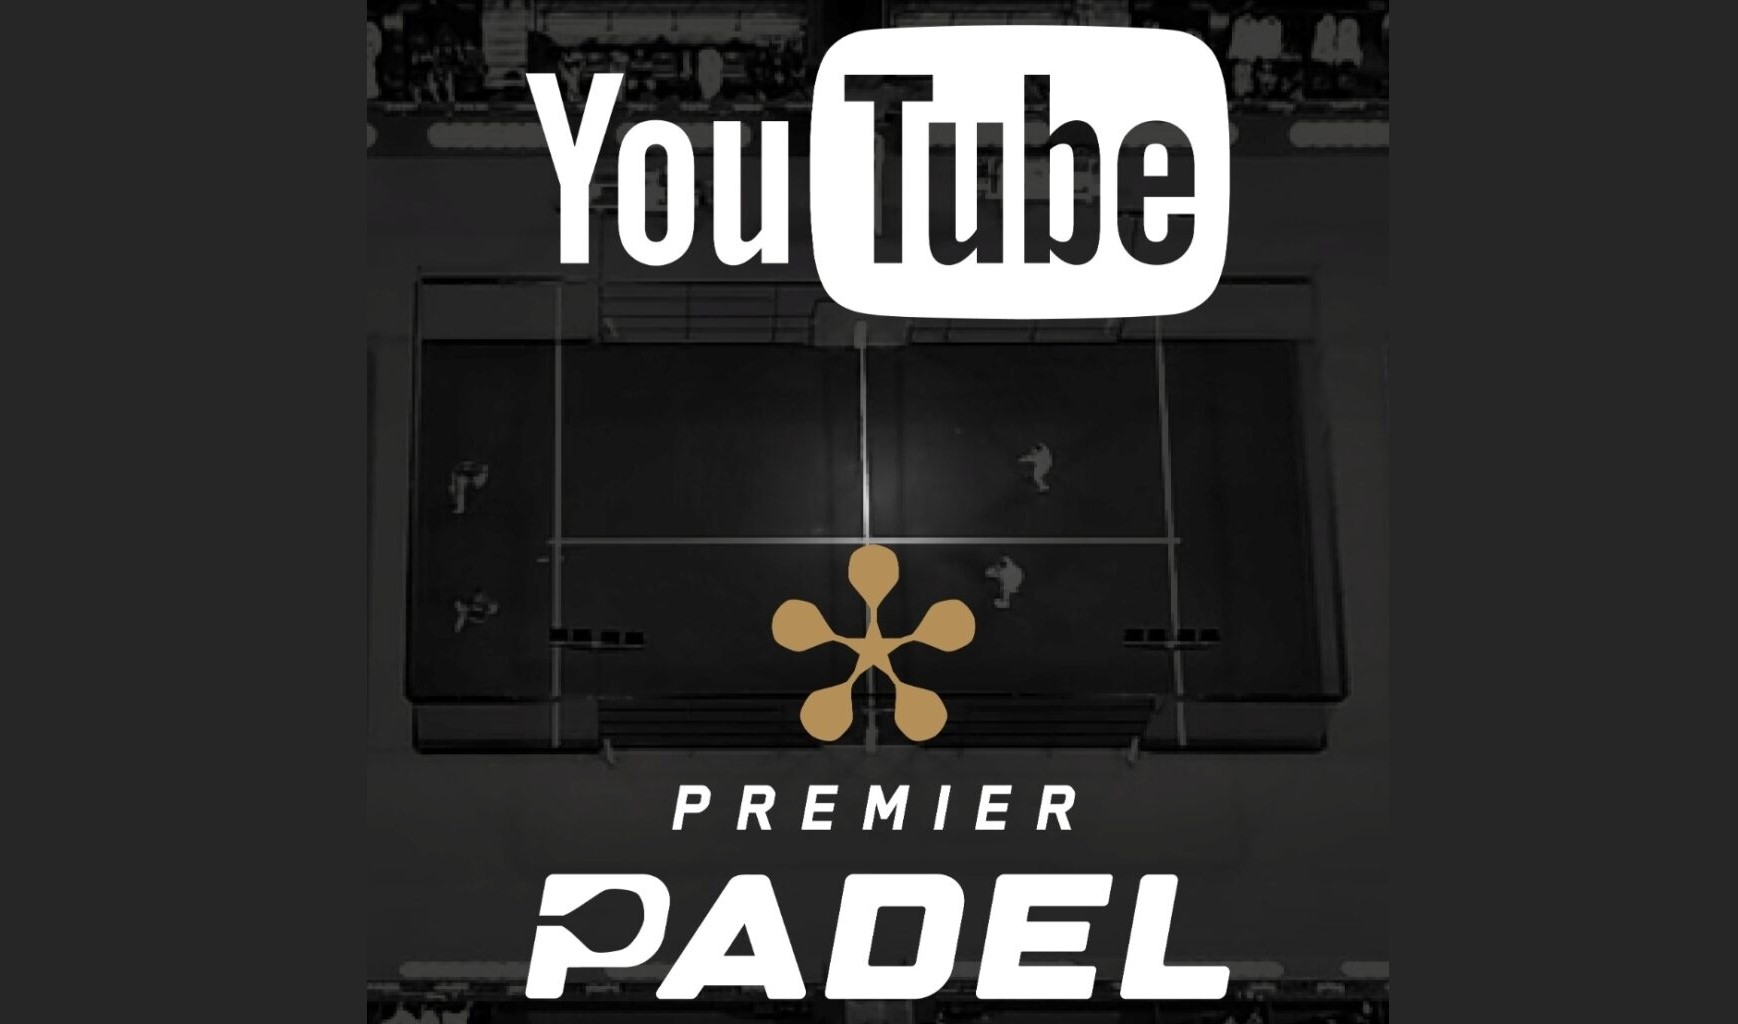 Premier Padel emitido en Youtube en España